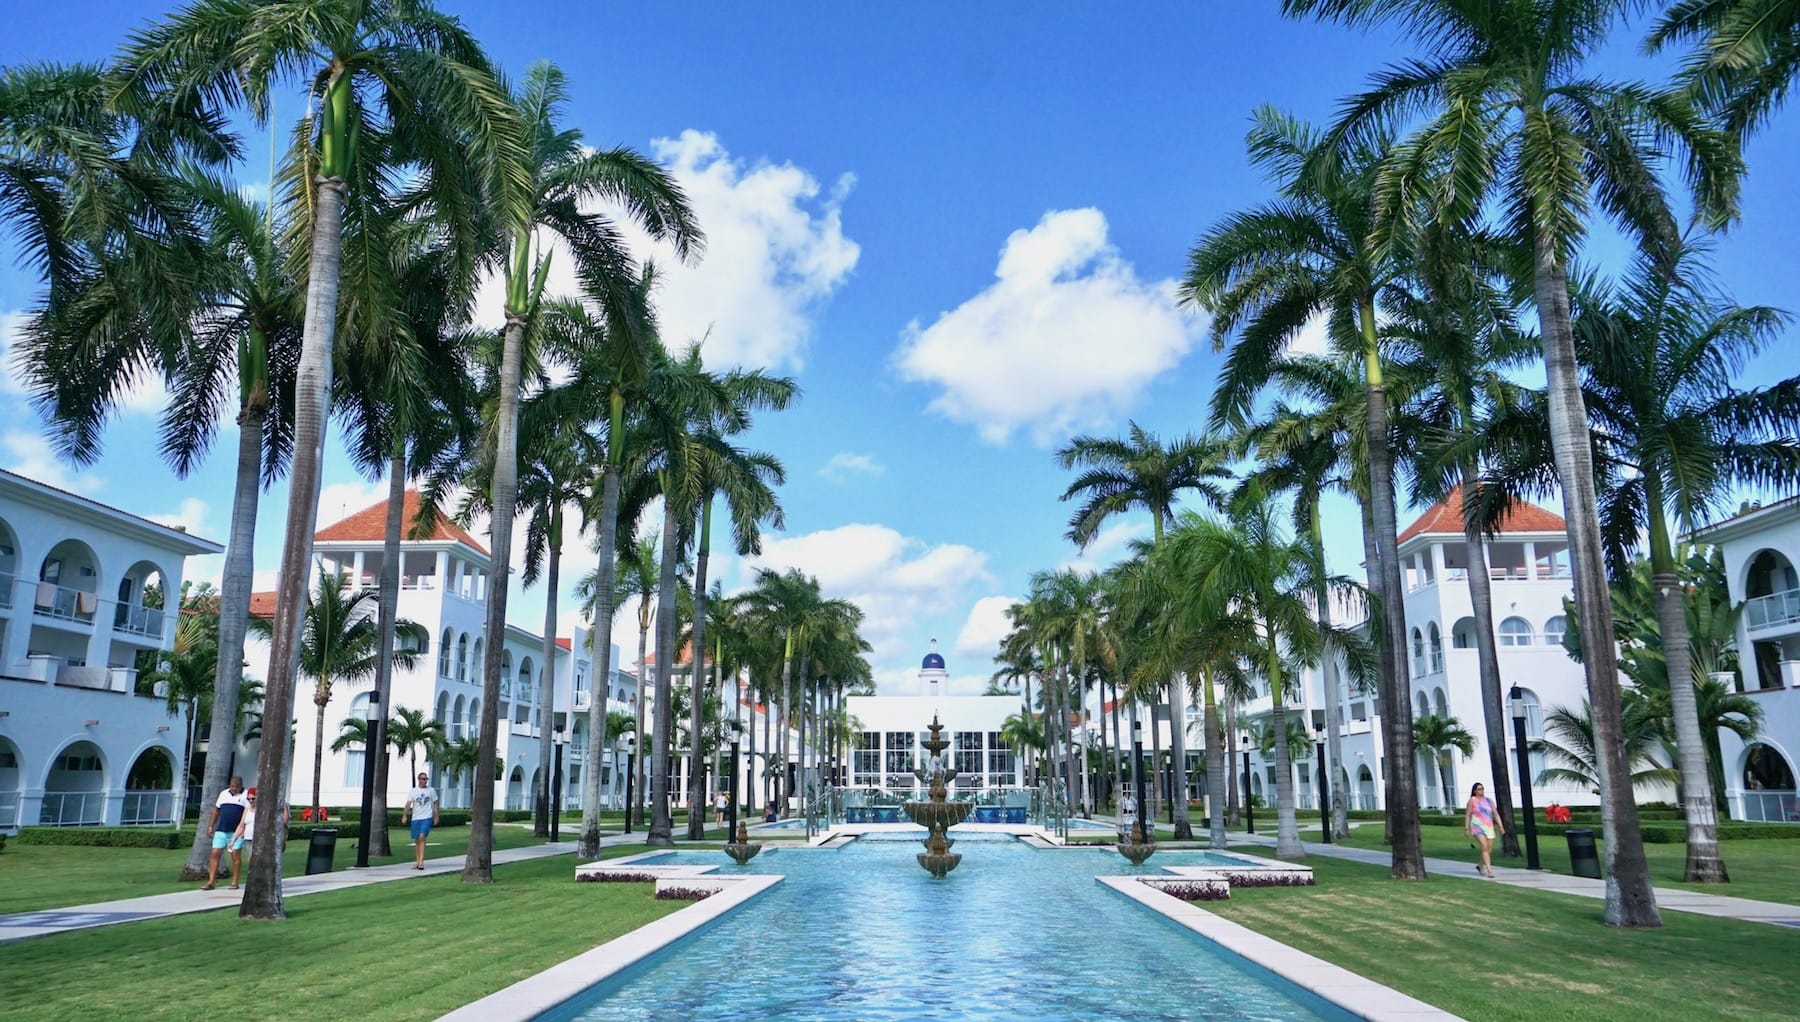 Hotel Riu Palace: The Posh Cancun Resort - Bohemian Vagabond - Jacki Ueng